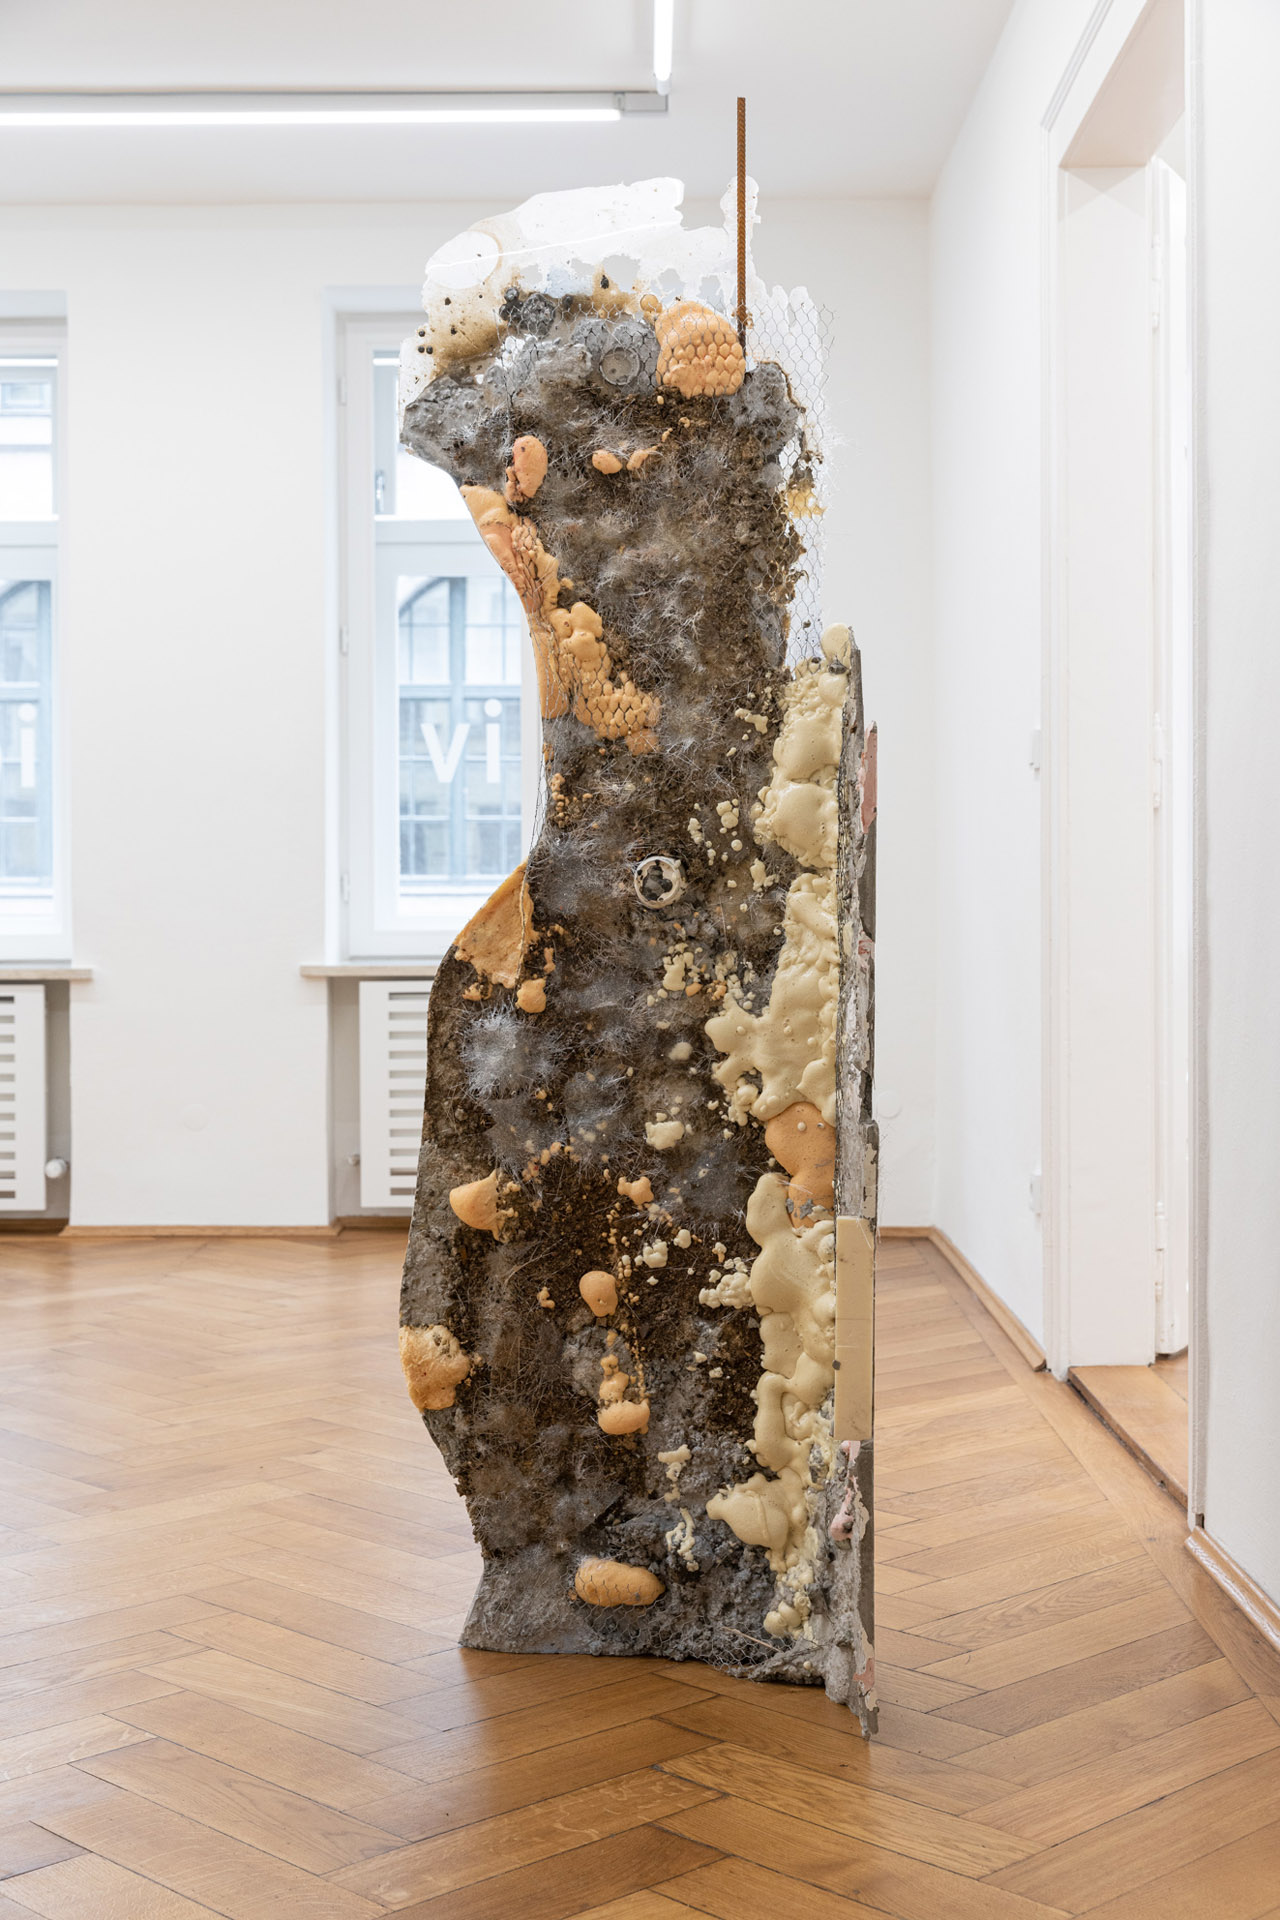 Patrick Ostrowsky at Galerie Britta Rettberg – Art Viewer